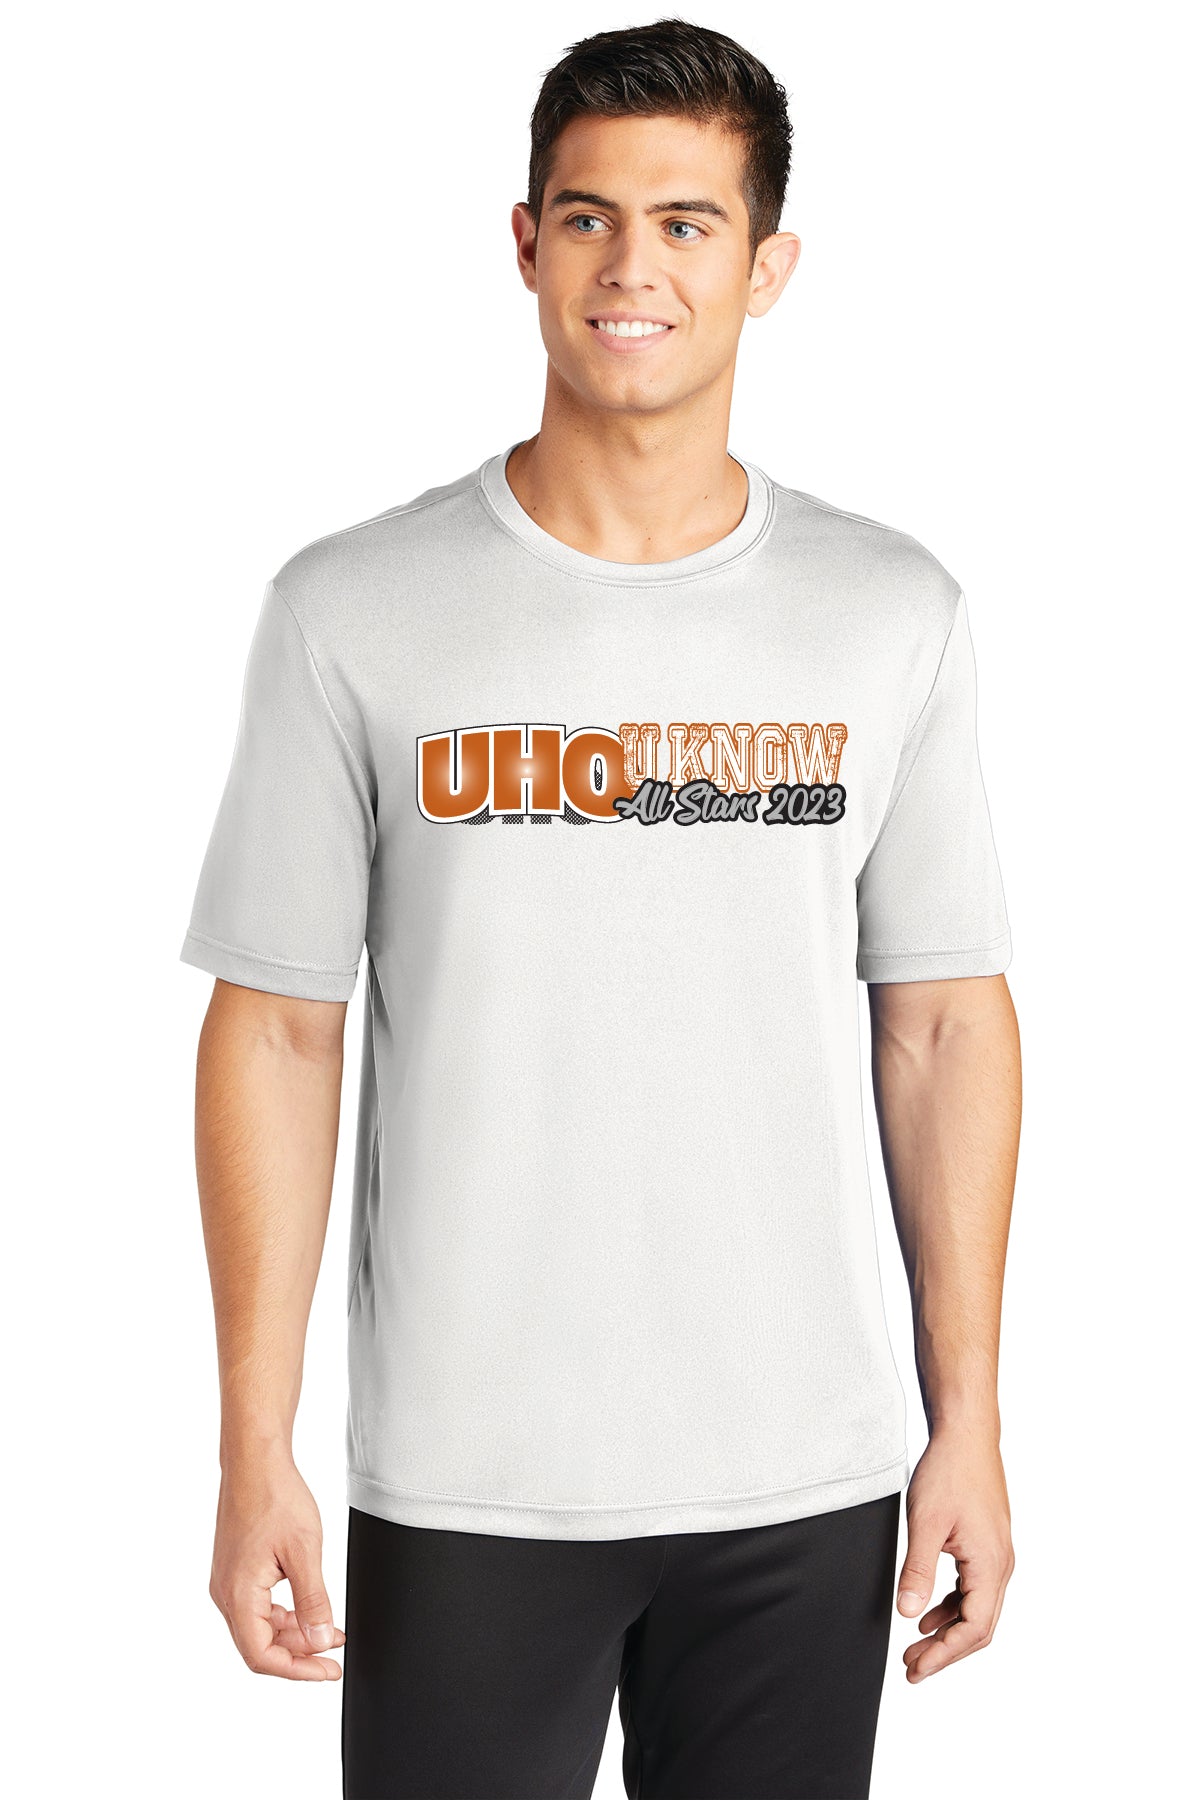 UHO U Know Moisture-Wicking T-Shirt